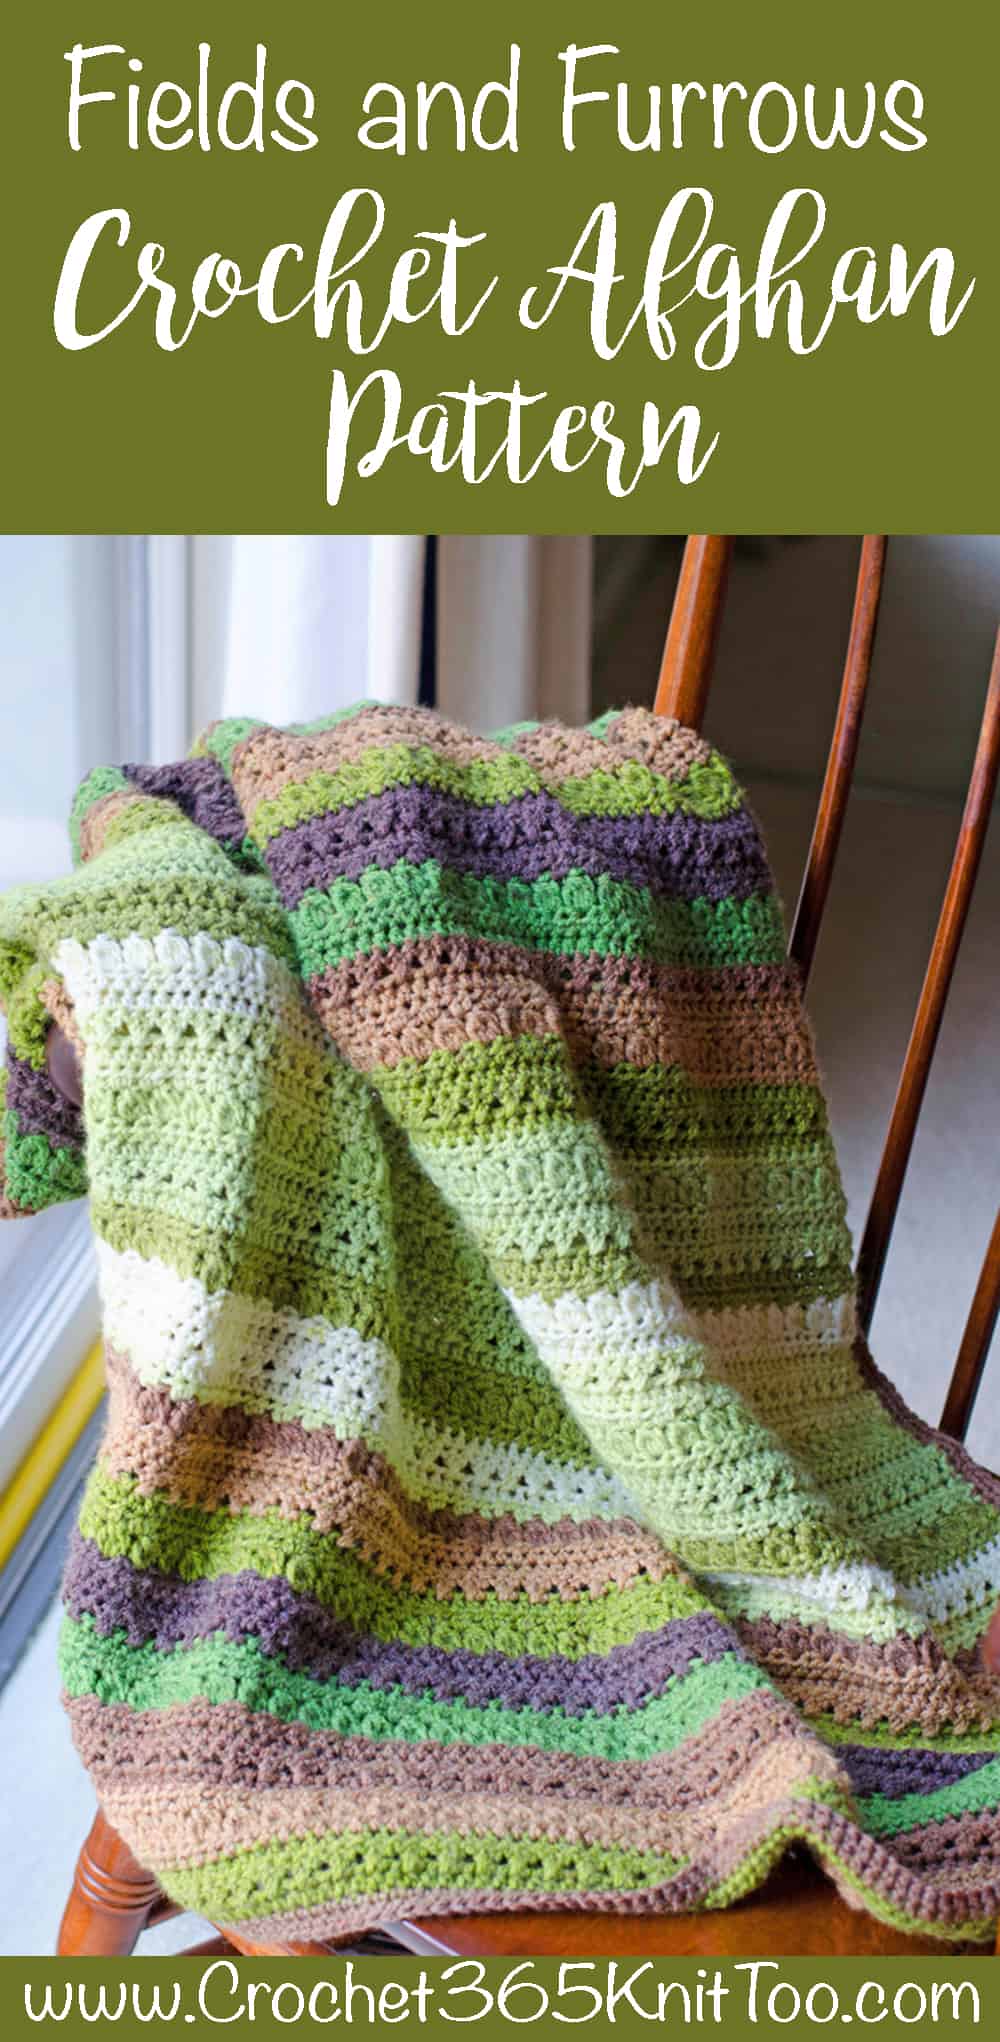 Free Crochet afghan pattern